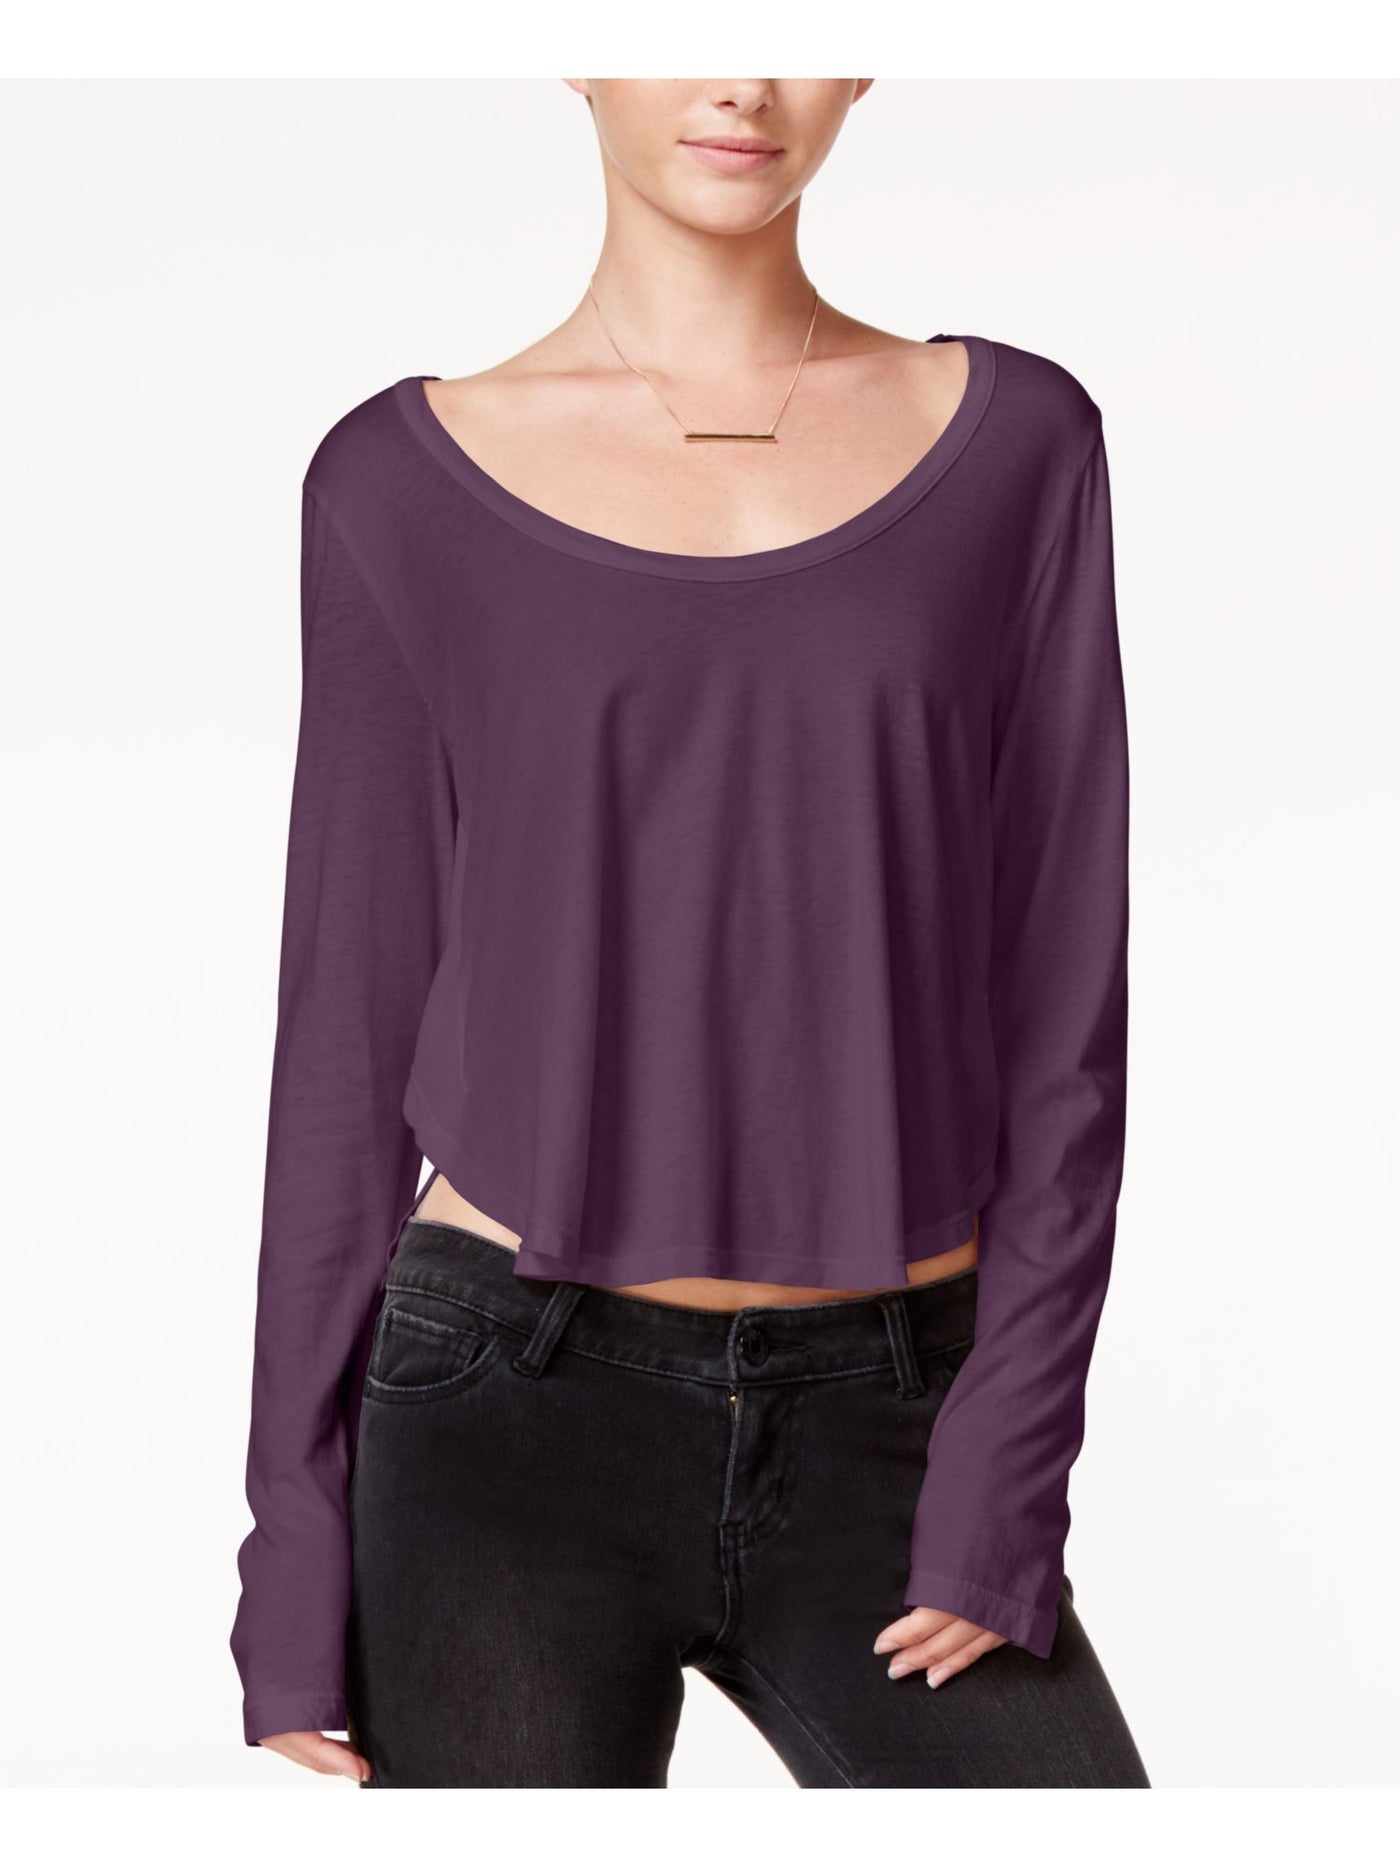 CHELSEA SKY Womens Purple Long Sleeve Jewel Neck Hi-Lo Top Size: XL